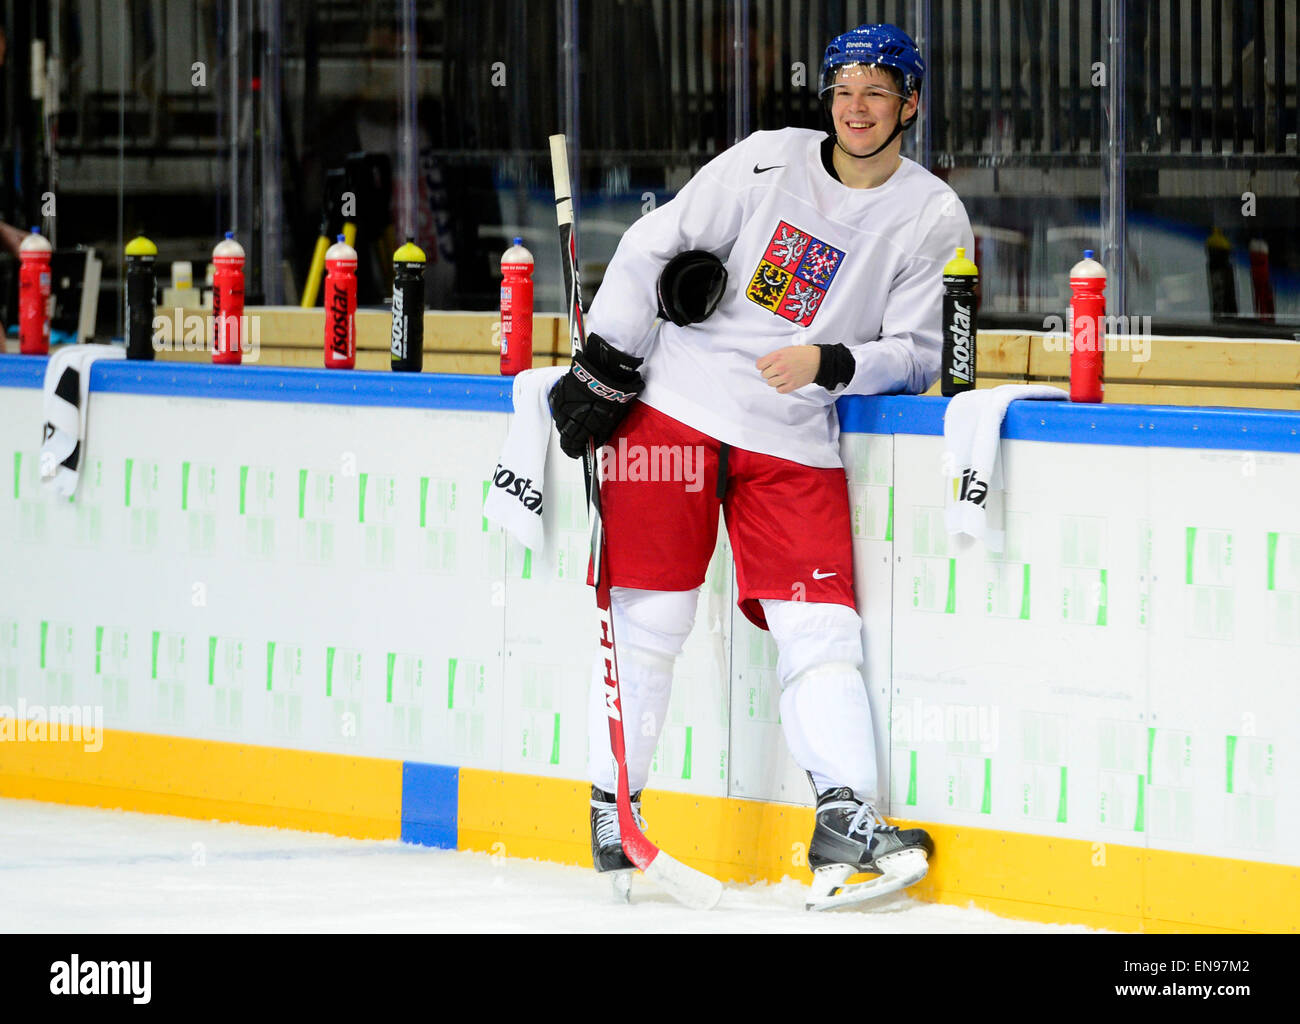 [Image: czech-national-hockey-team-player-tomas-...EN97M2.jpg]